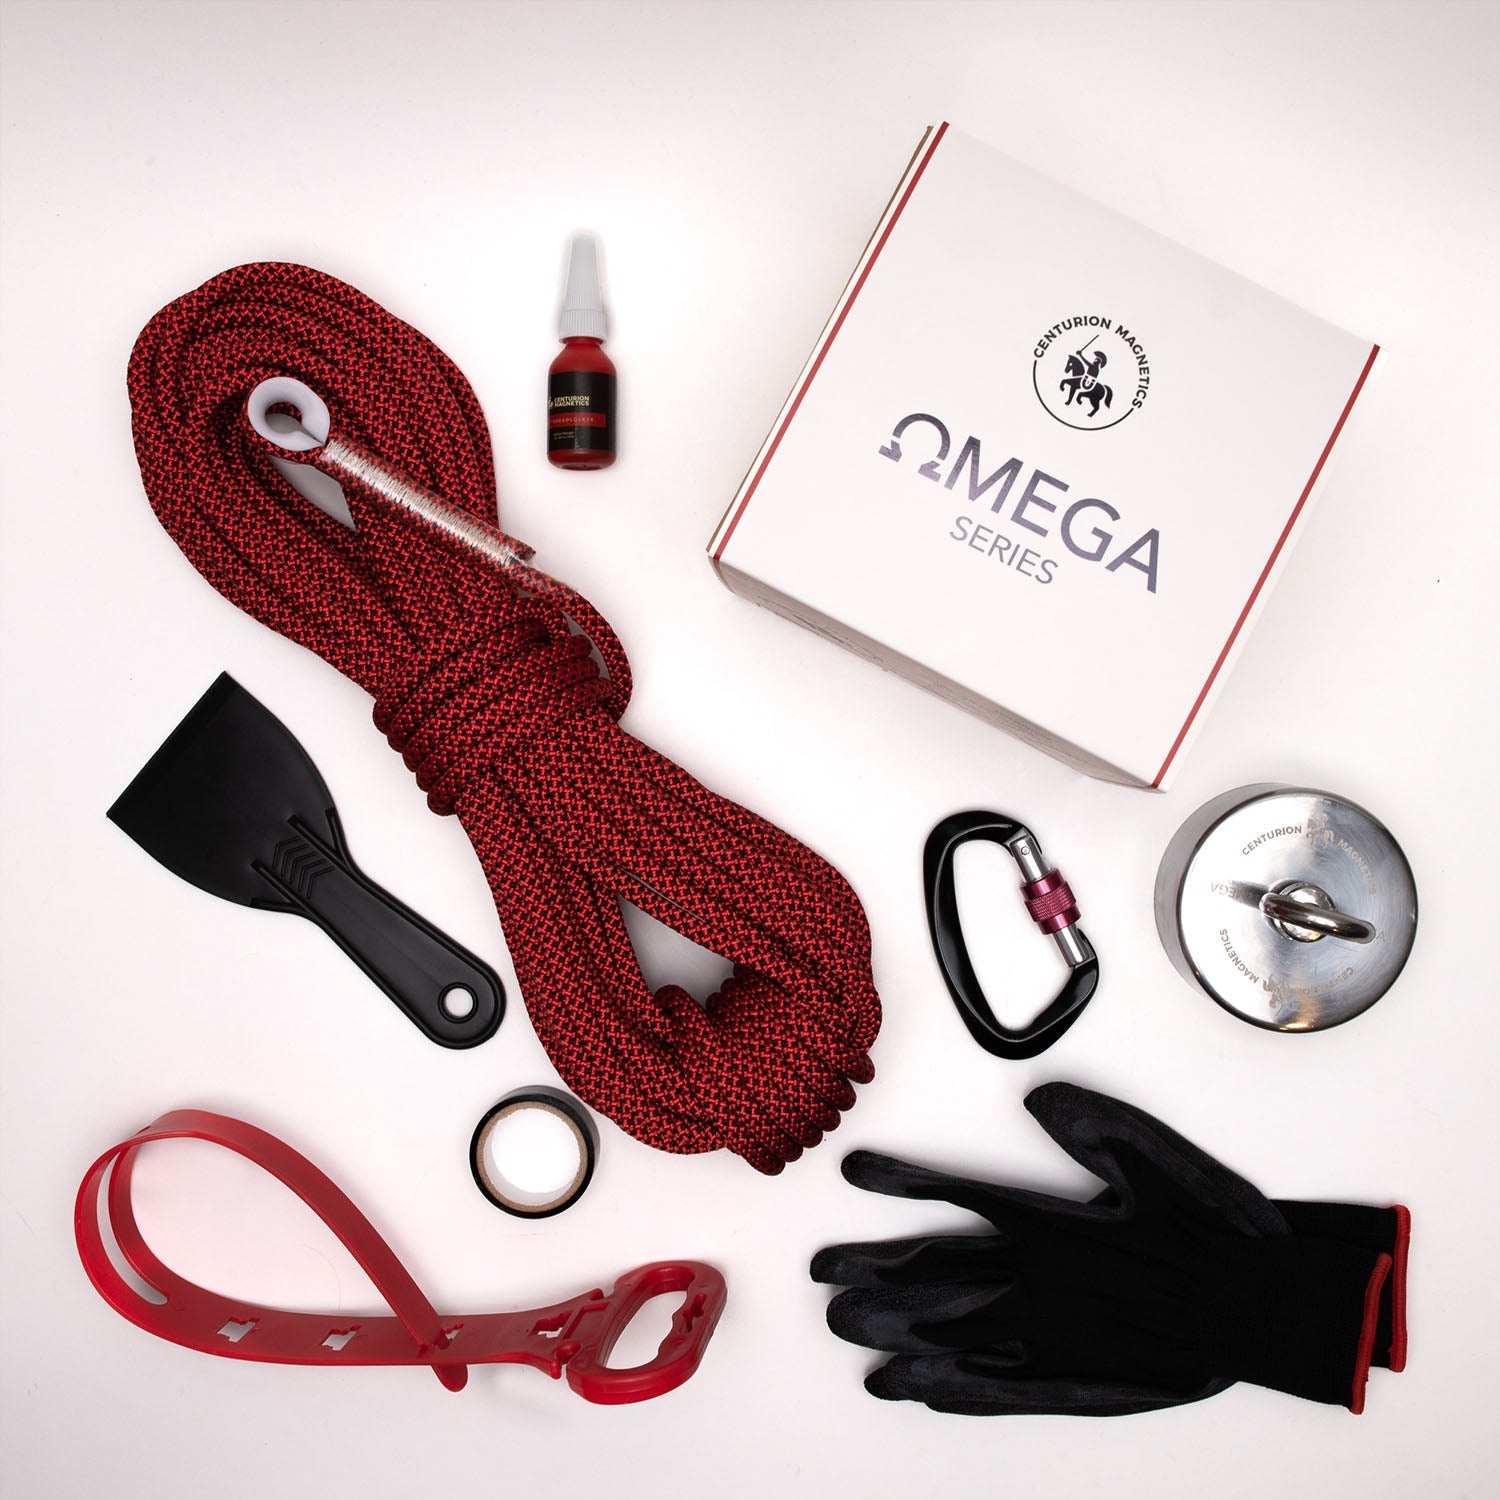 Pro Magnet Fishing Kit  2500 Omega Series – Centurion Magnetics